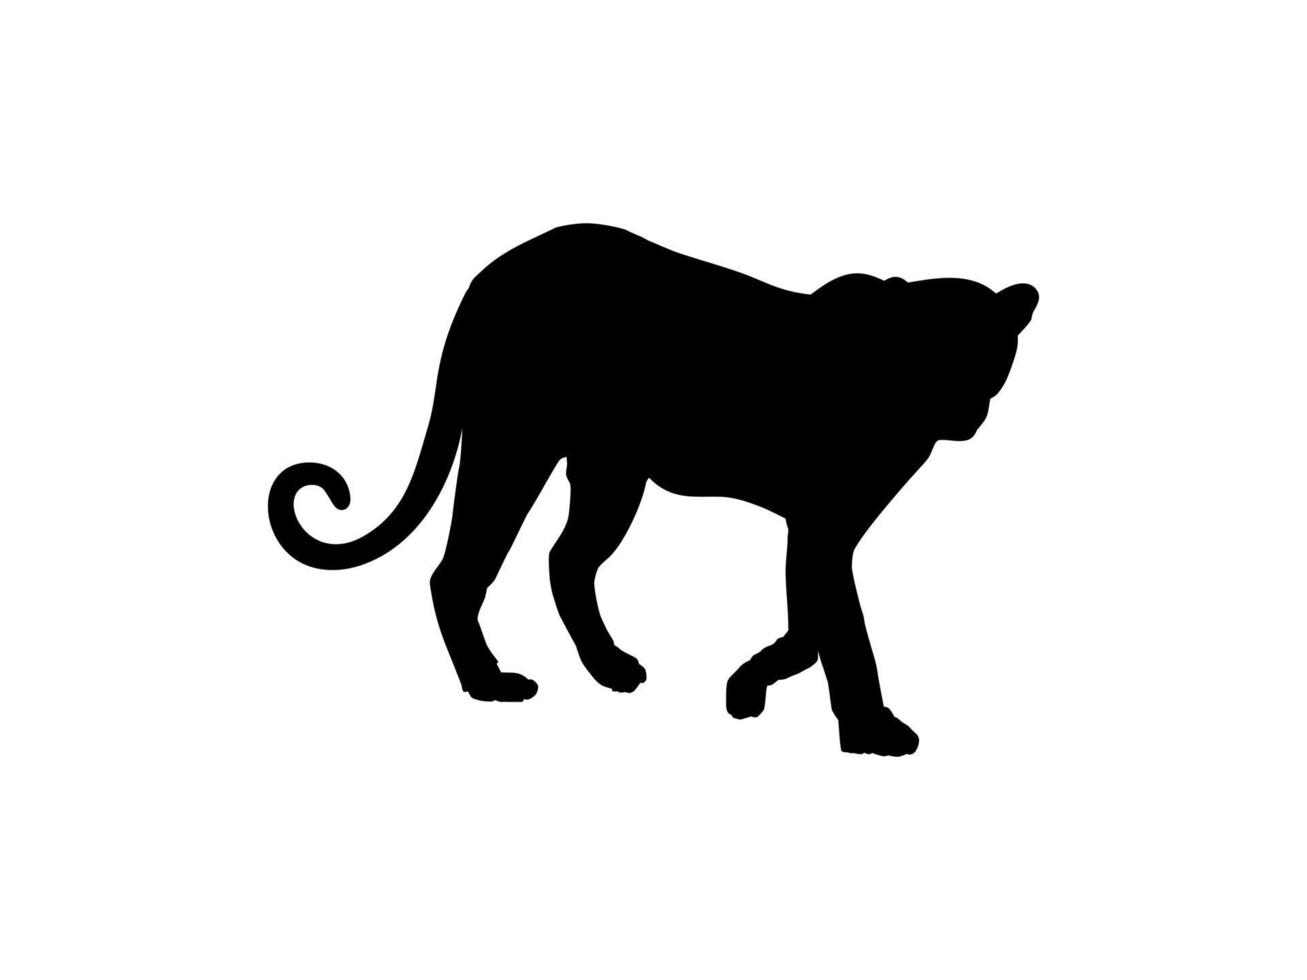 Walking Standing Tiger, Leopard, Cheetah, Black Panther, Jaguar, Big Cat Family Silhouette for Logo or Graphic Design Element. Vector Illustration